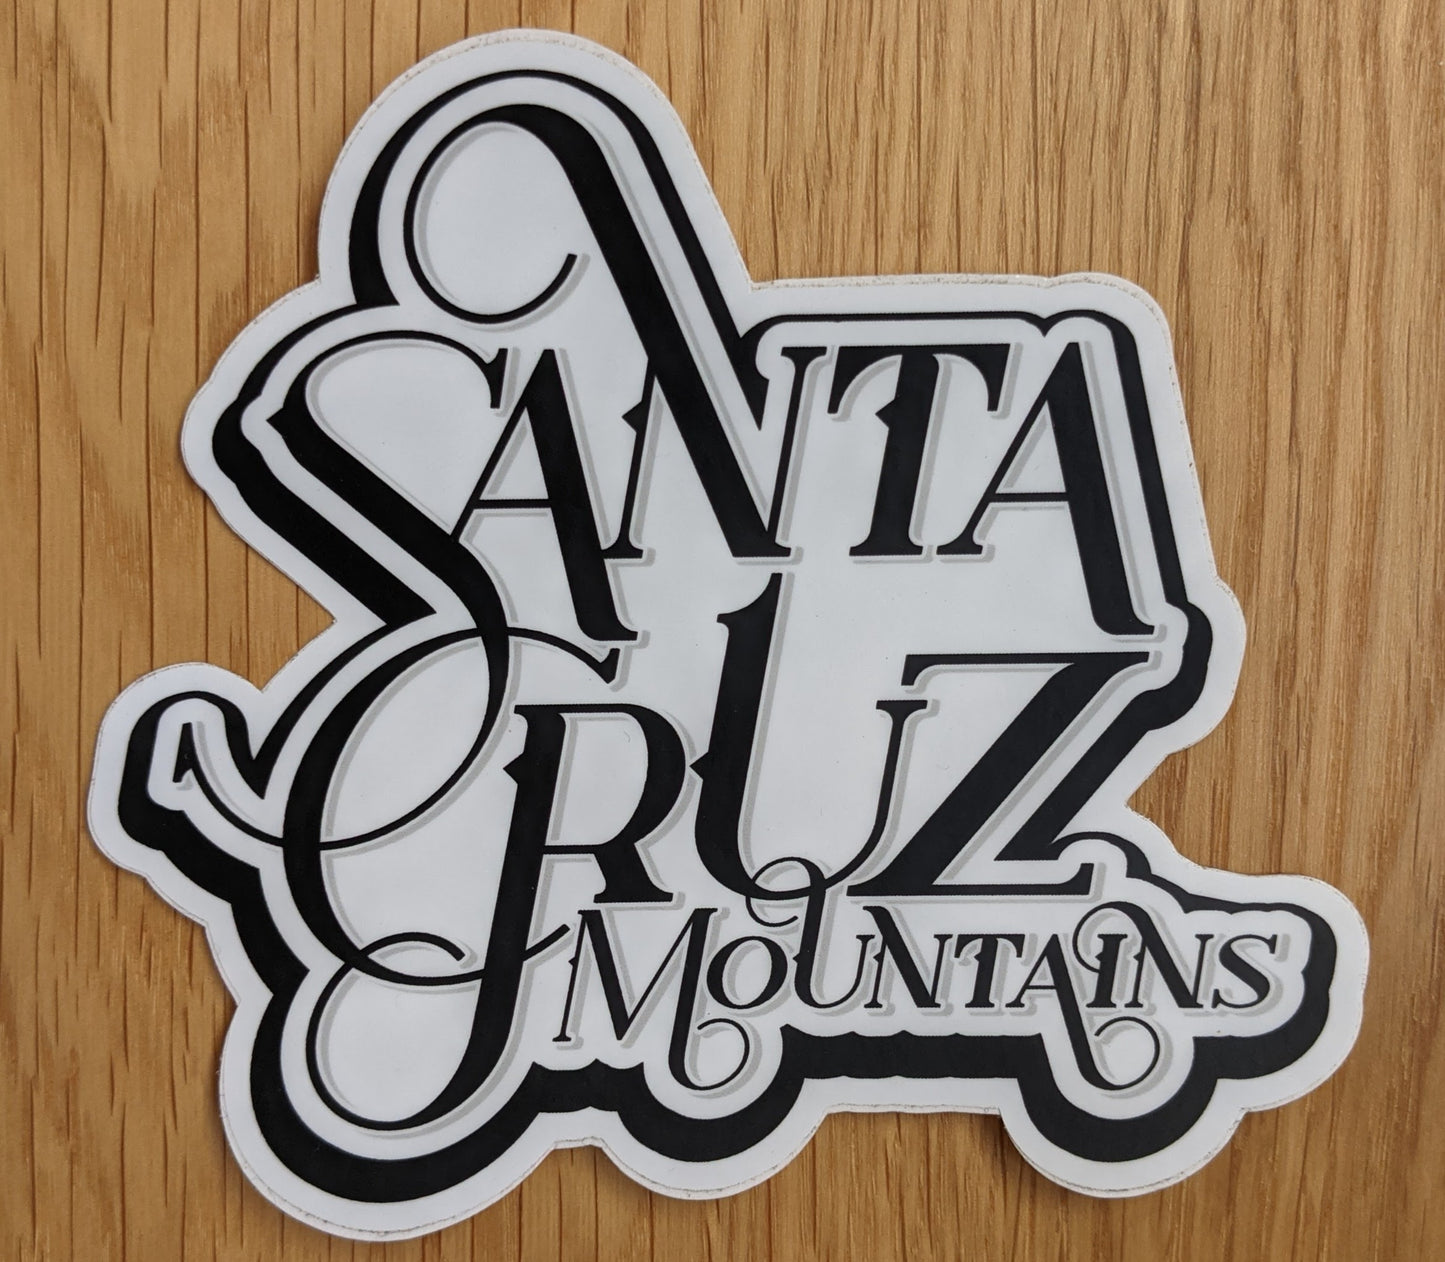 Fancy script sticker reading "Santa Cruz Mountains", by SCM Clothing